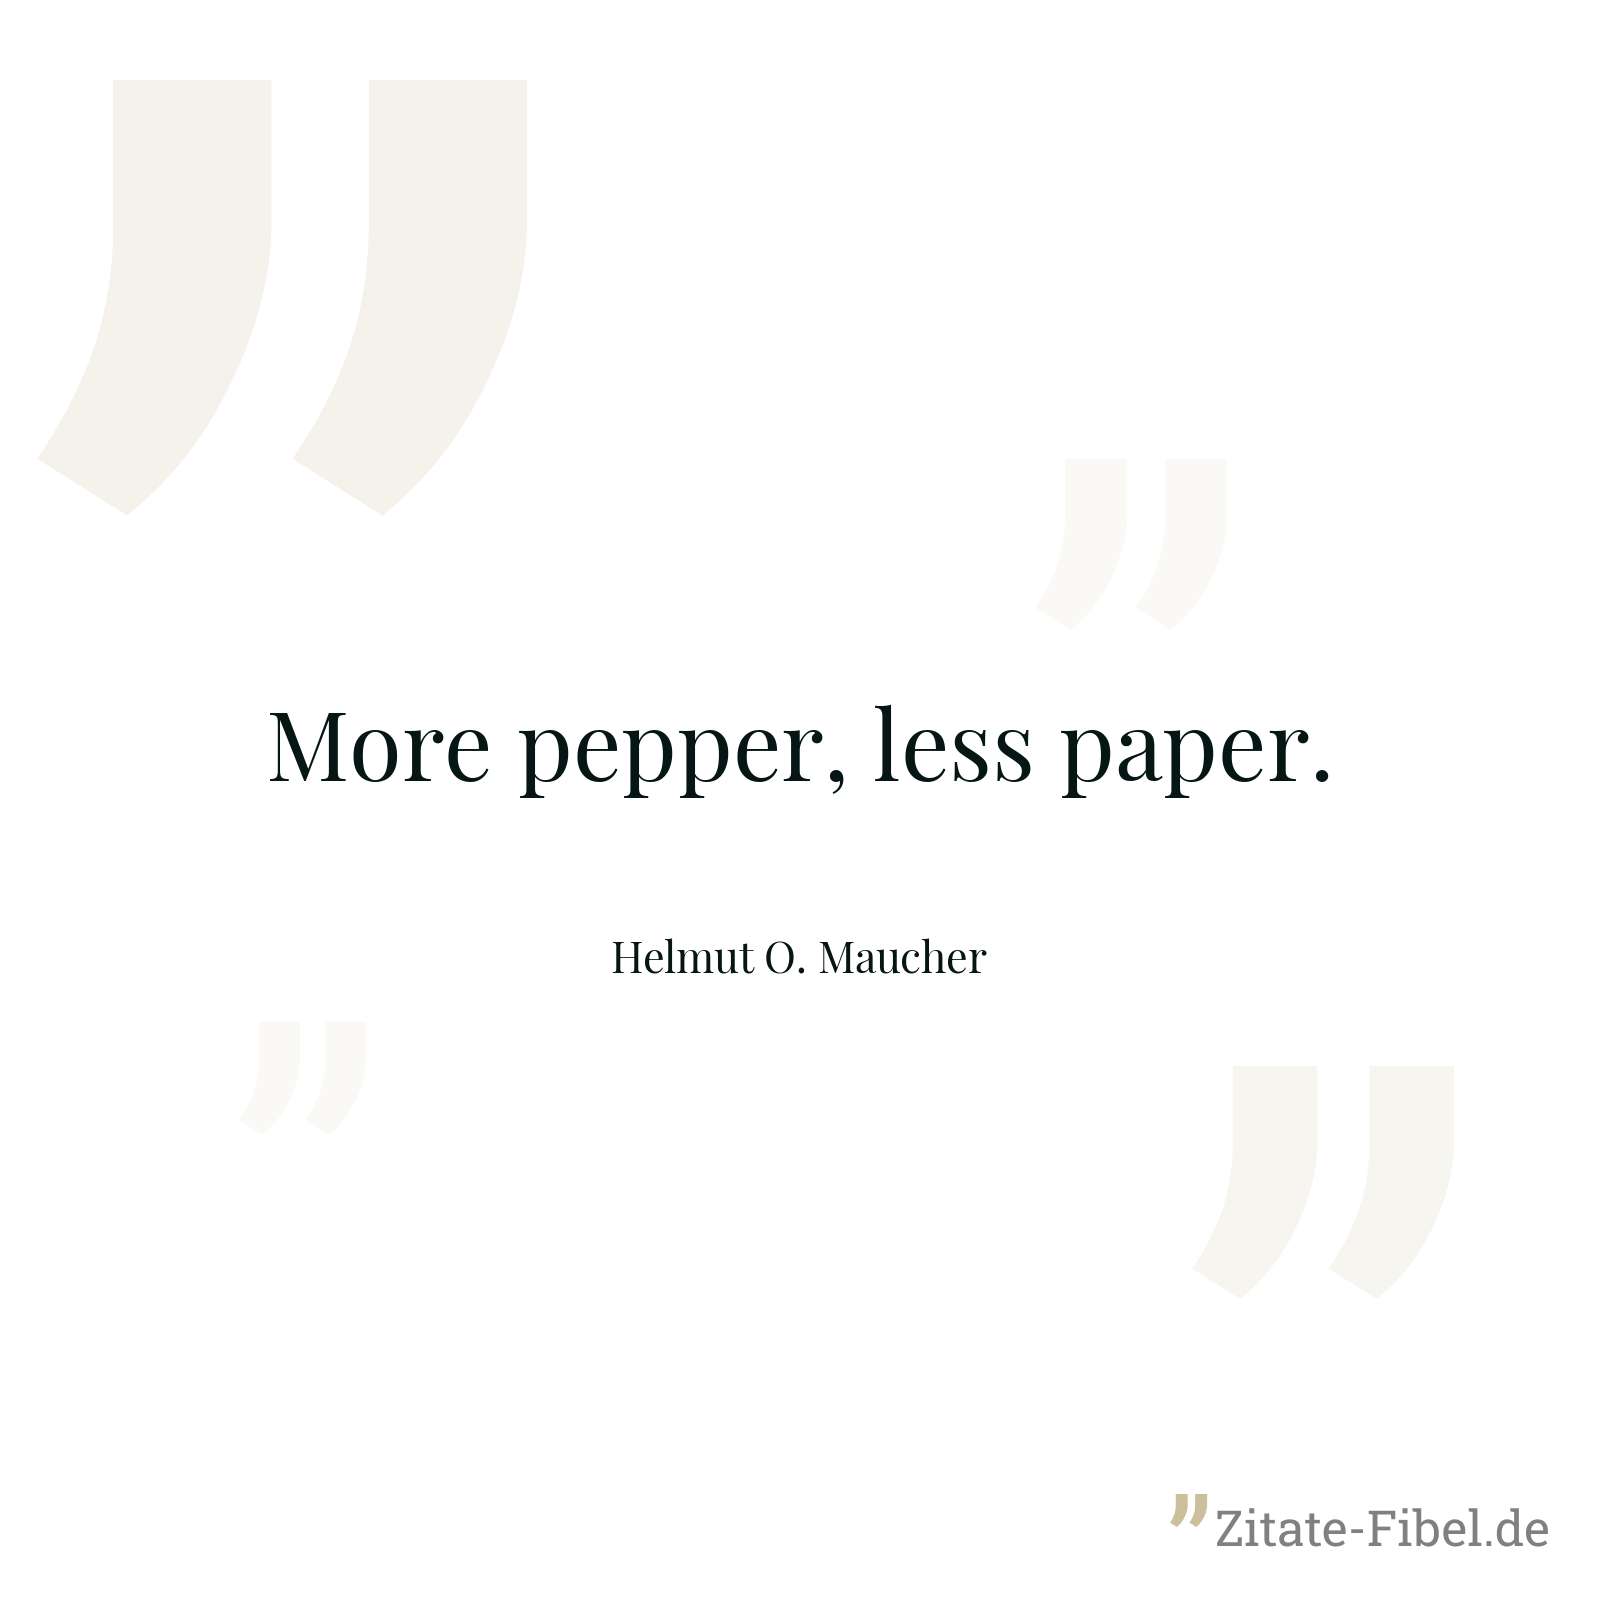 More pepper, less paper. - Helmut O. Maucher